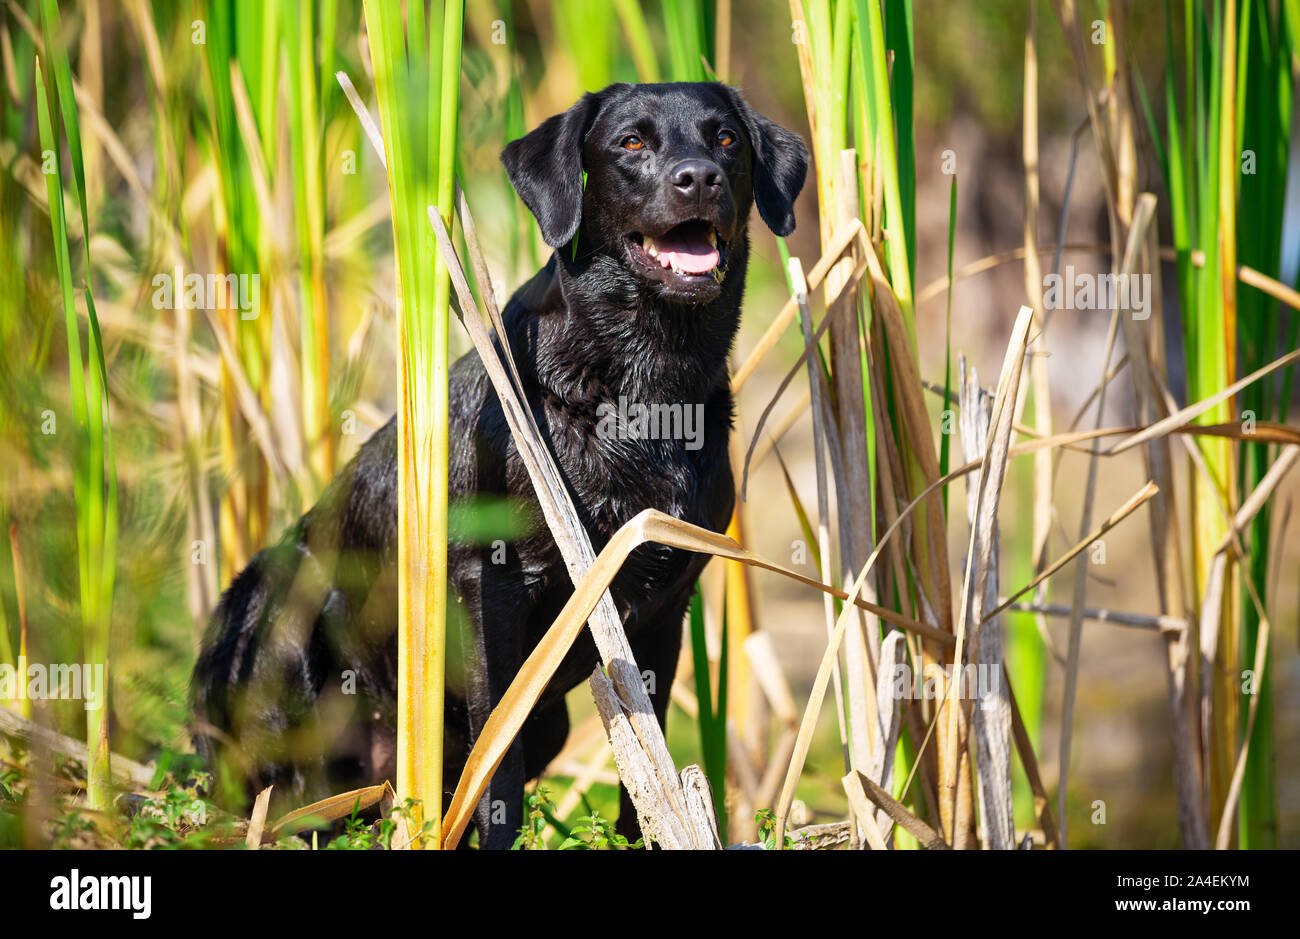 Sitting black Labrador Retriever dog Stock Photo